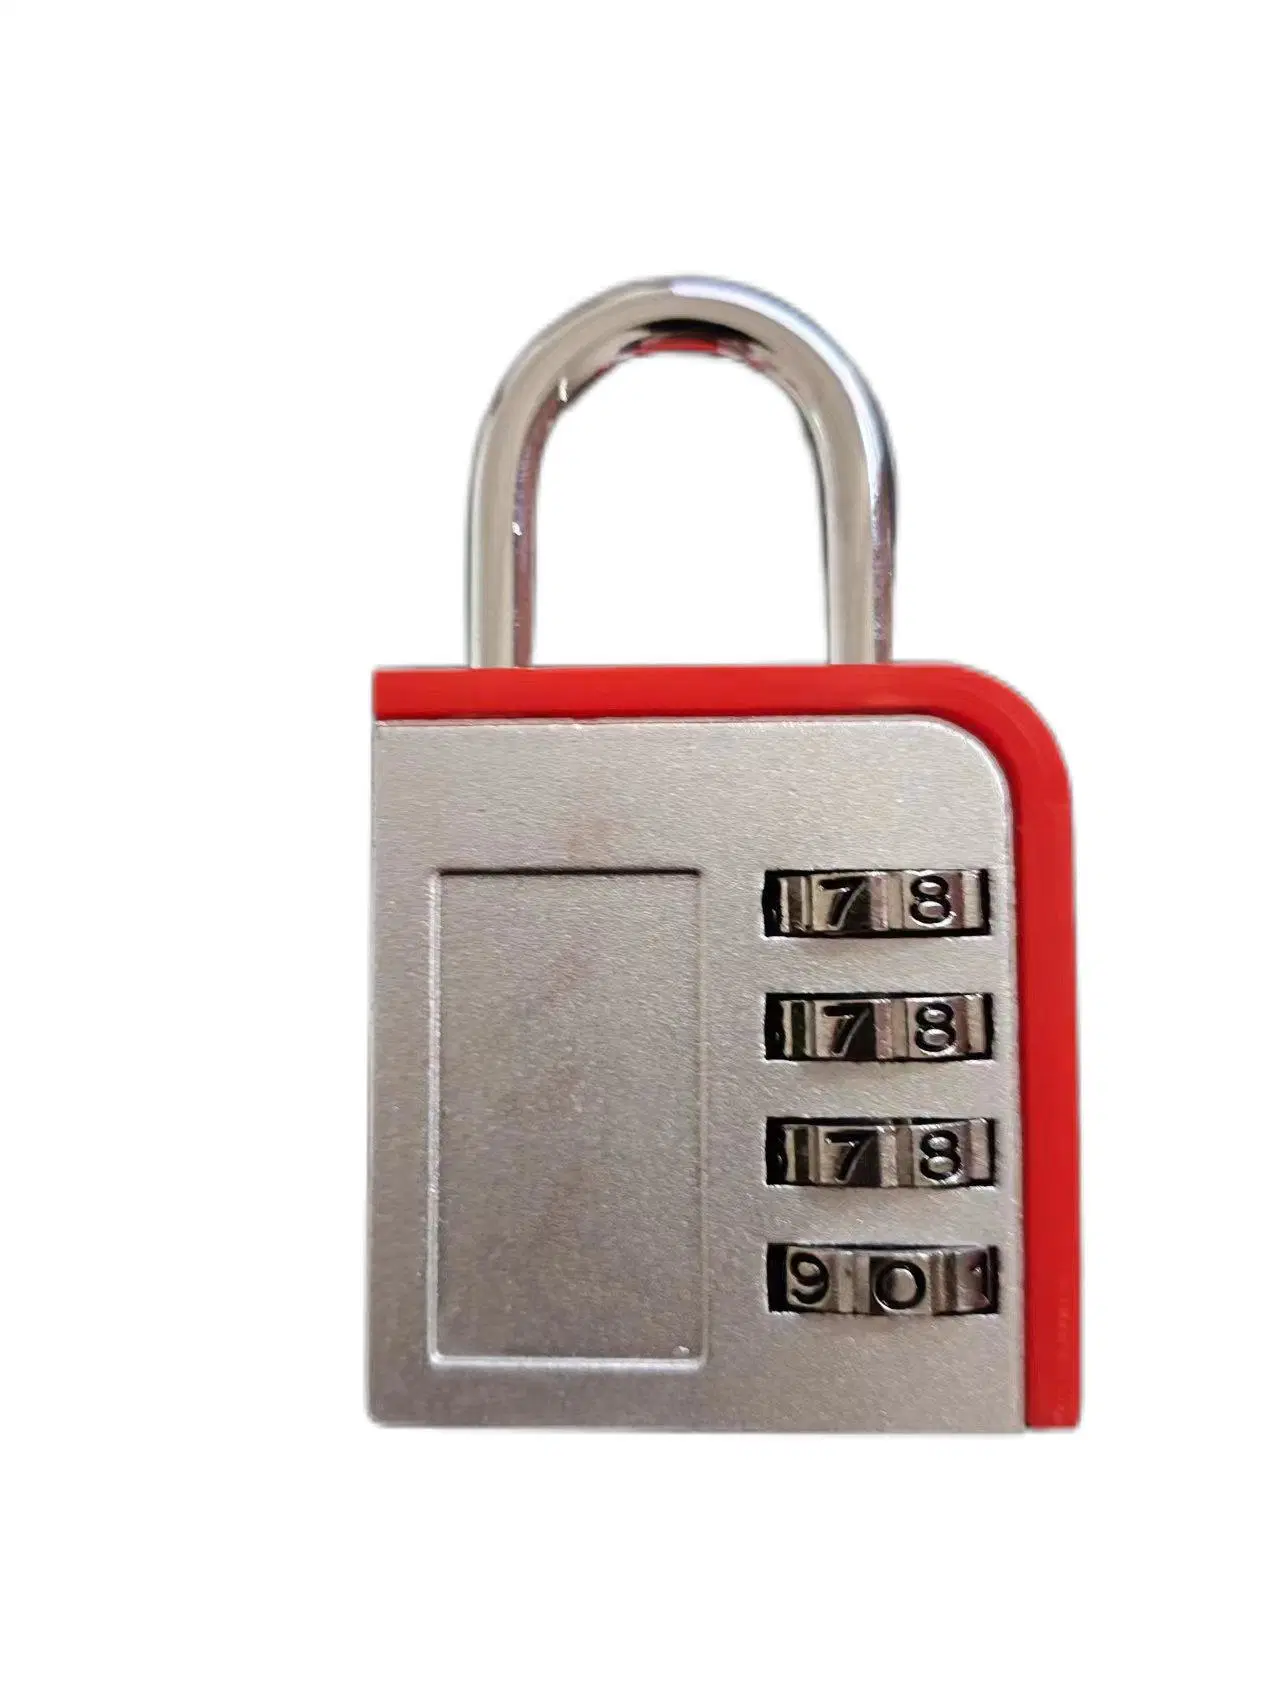 Showcase 4 Digit Code Password Luggage Padlock Combination Lock